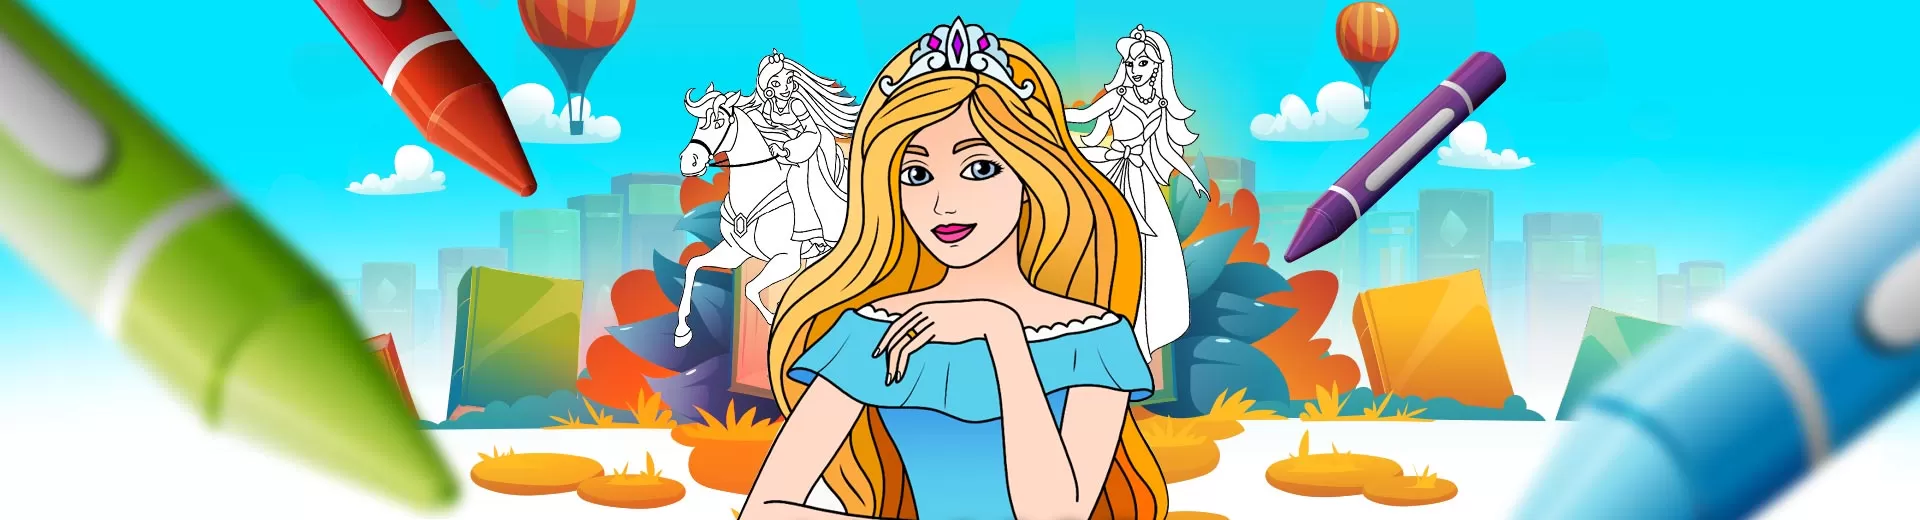 Princess Coloring Game Emulator Pc